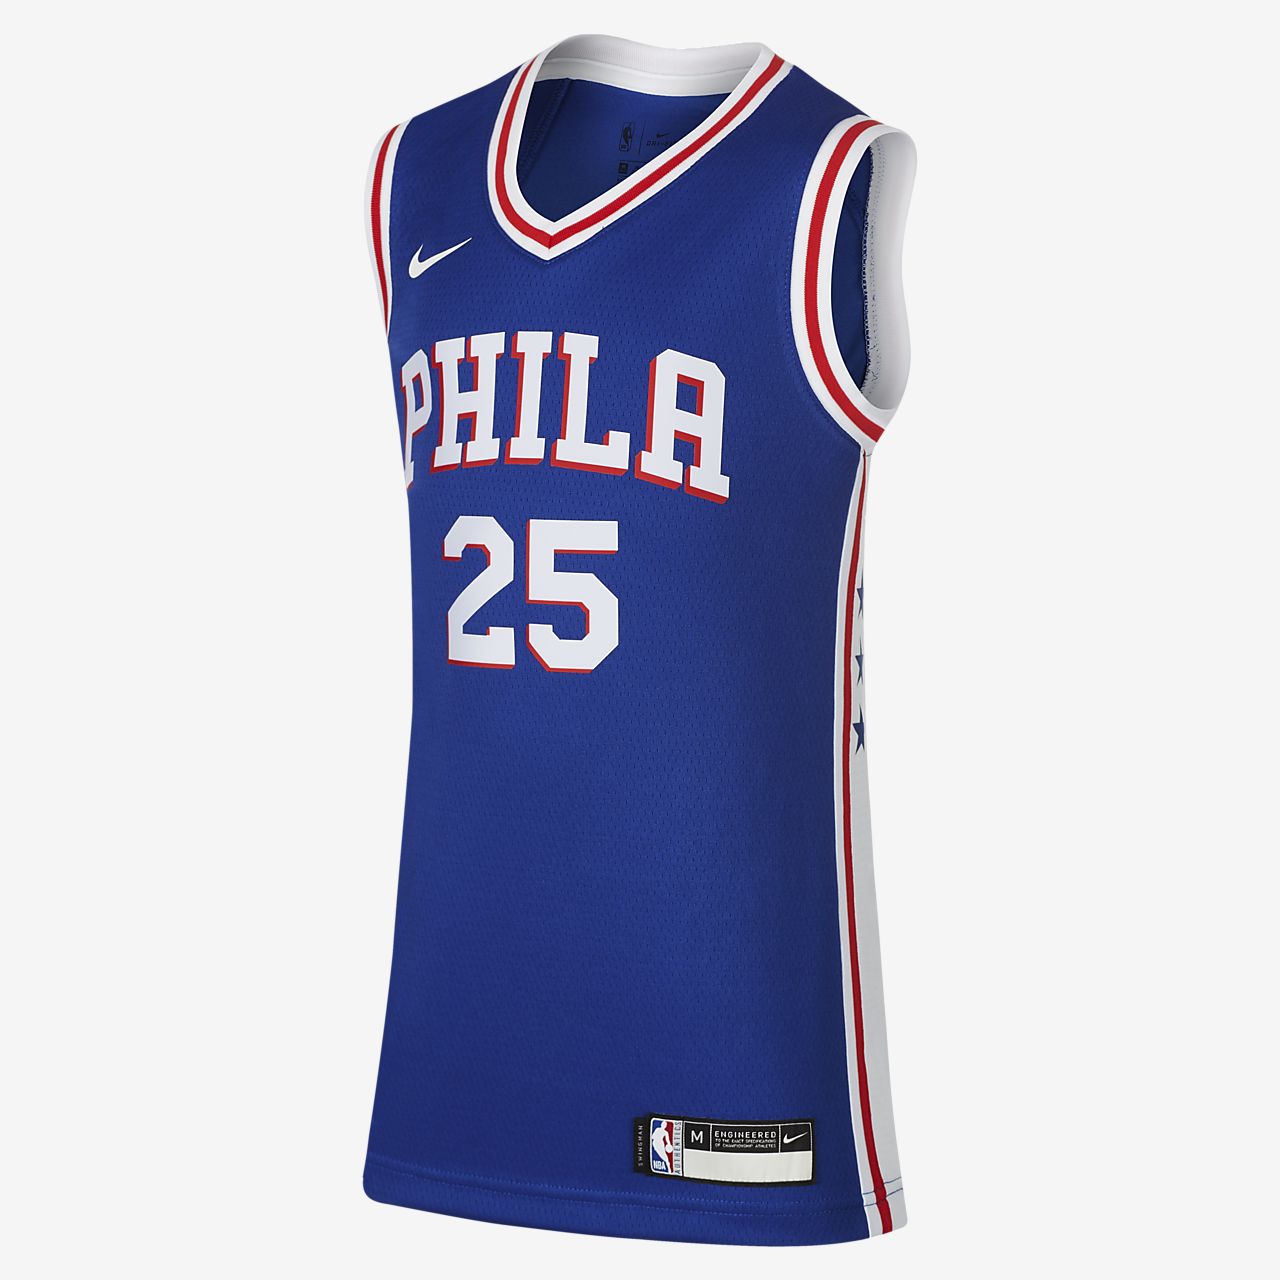 philadelphia 76ers jersey